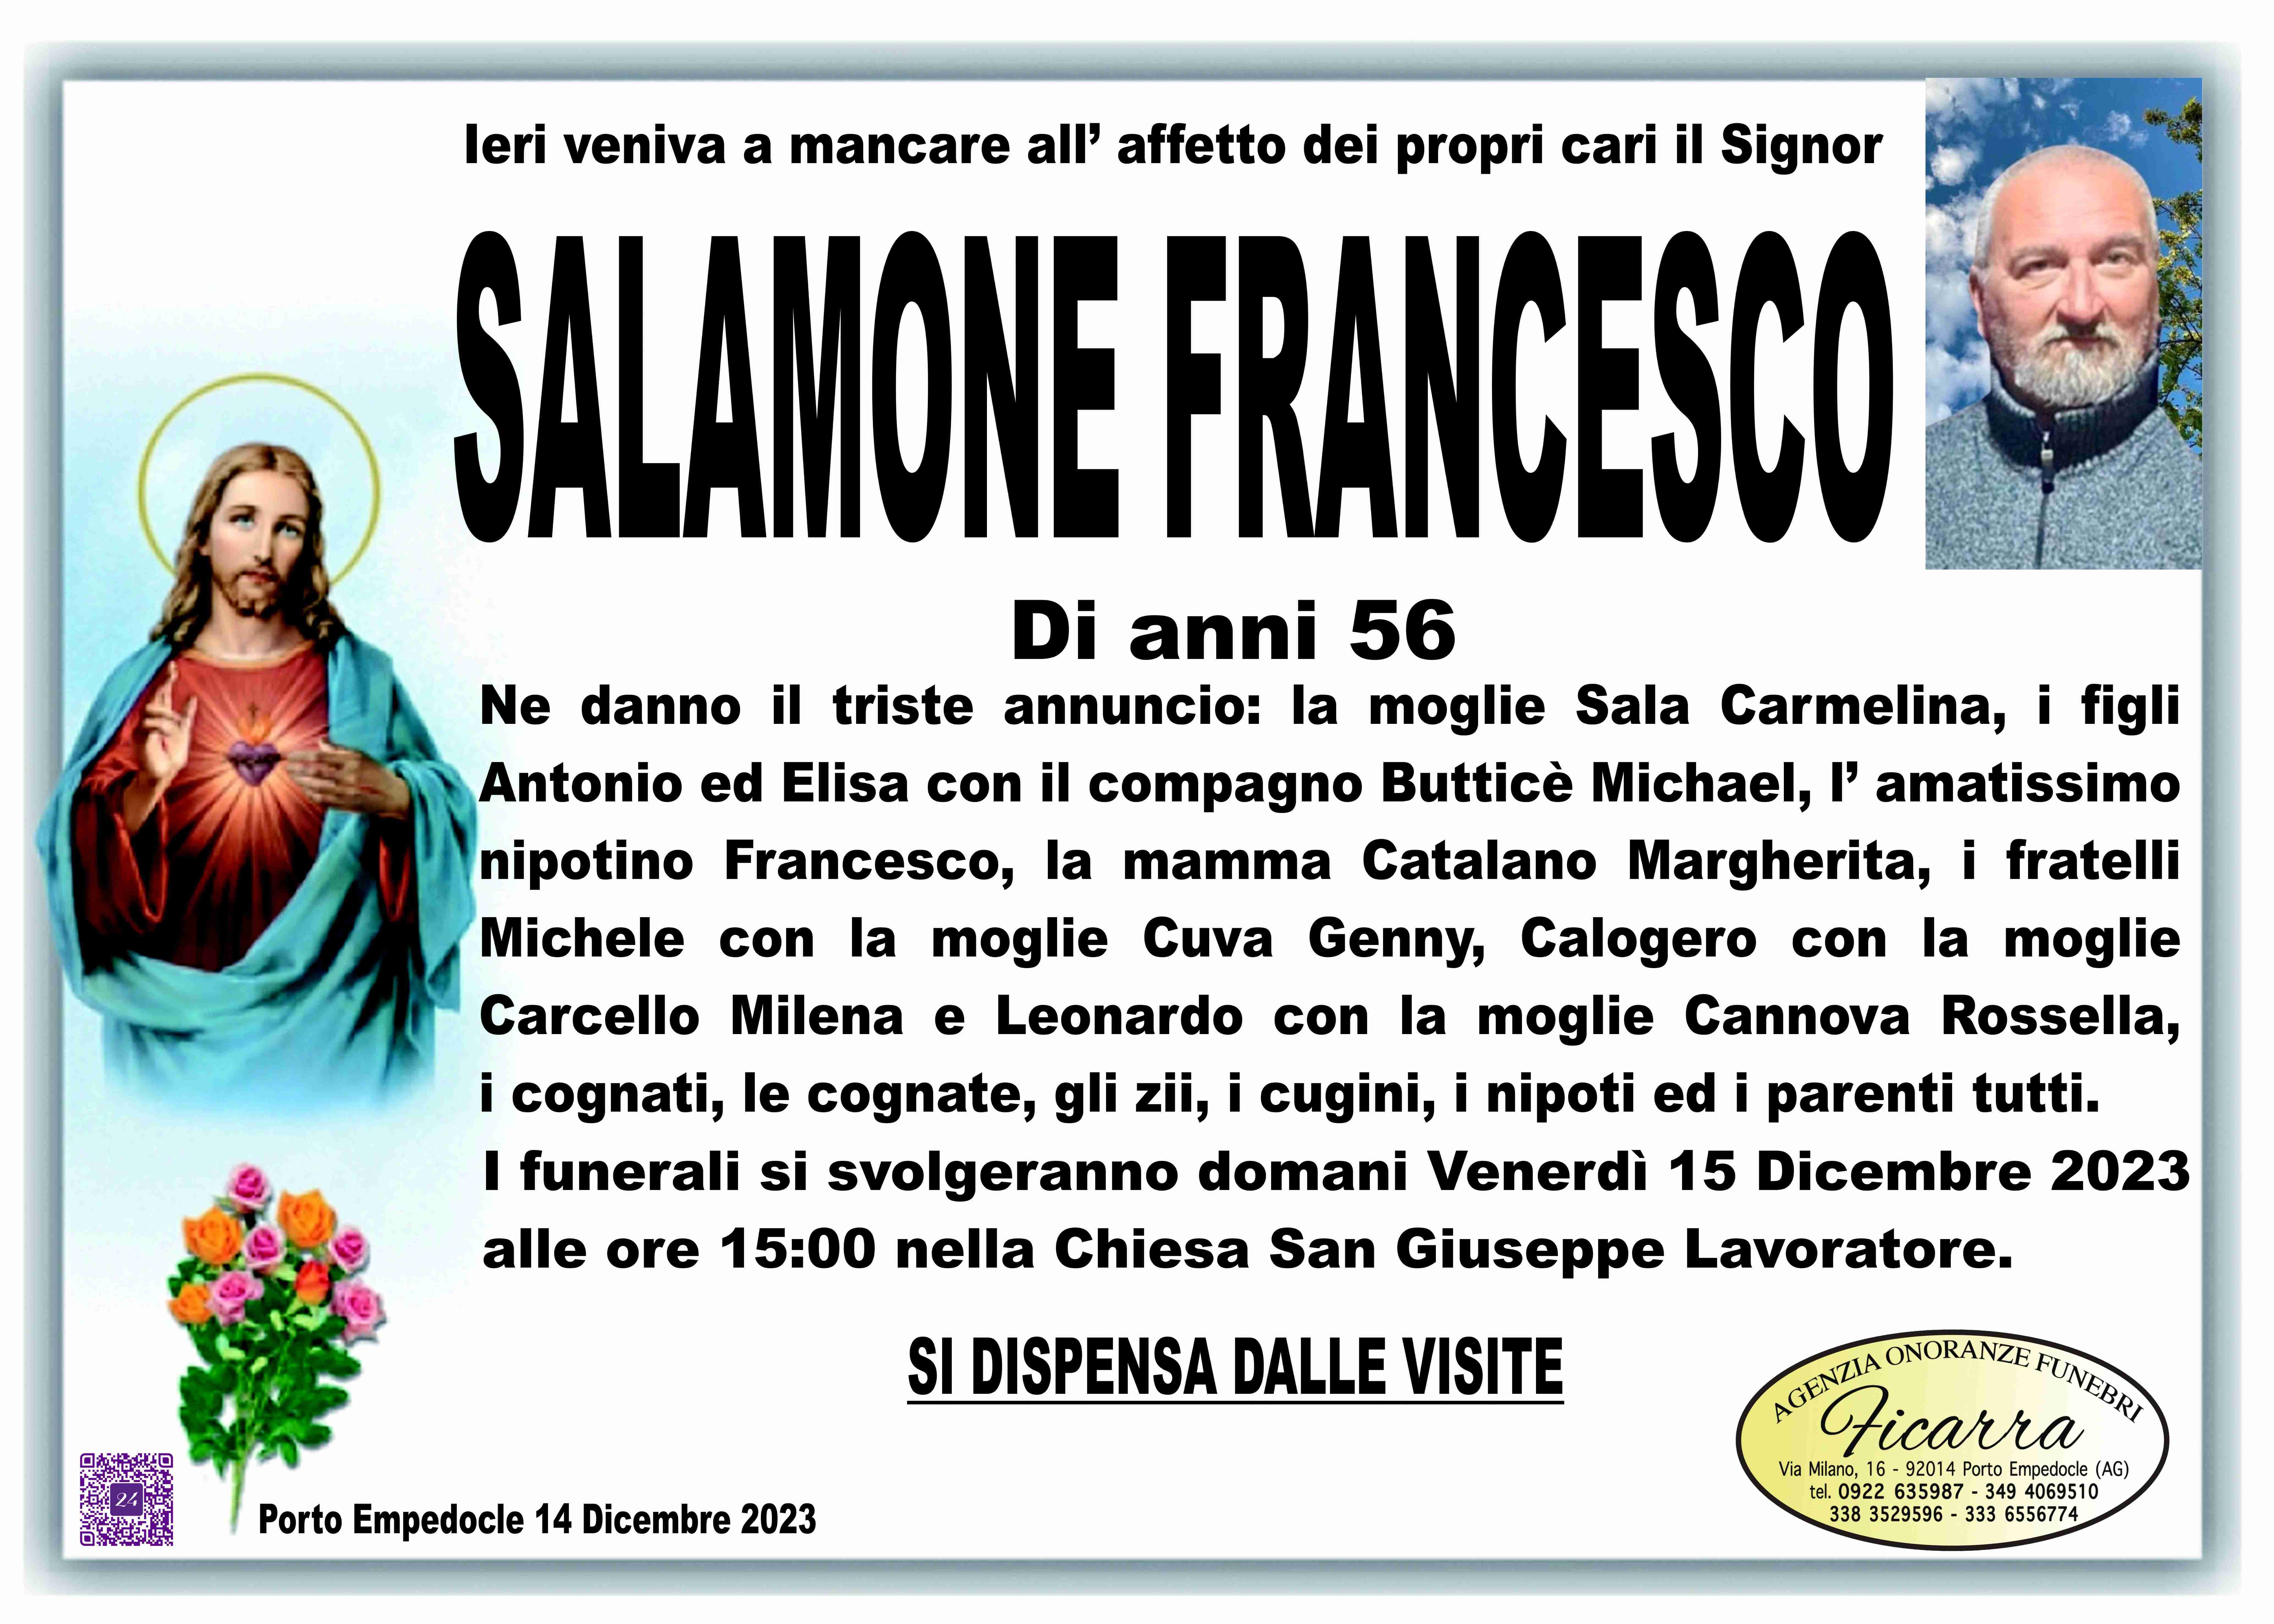 Francesco Salamone